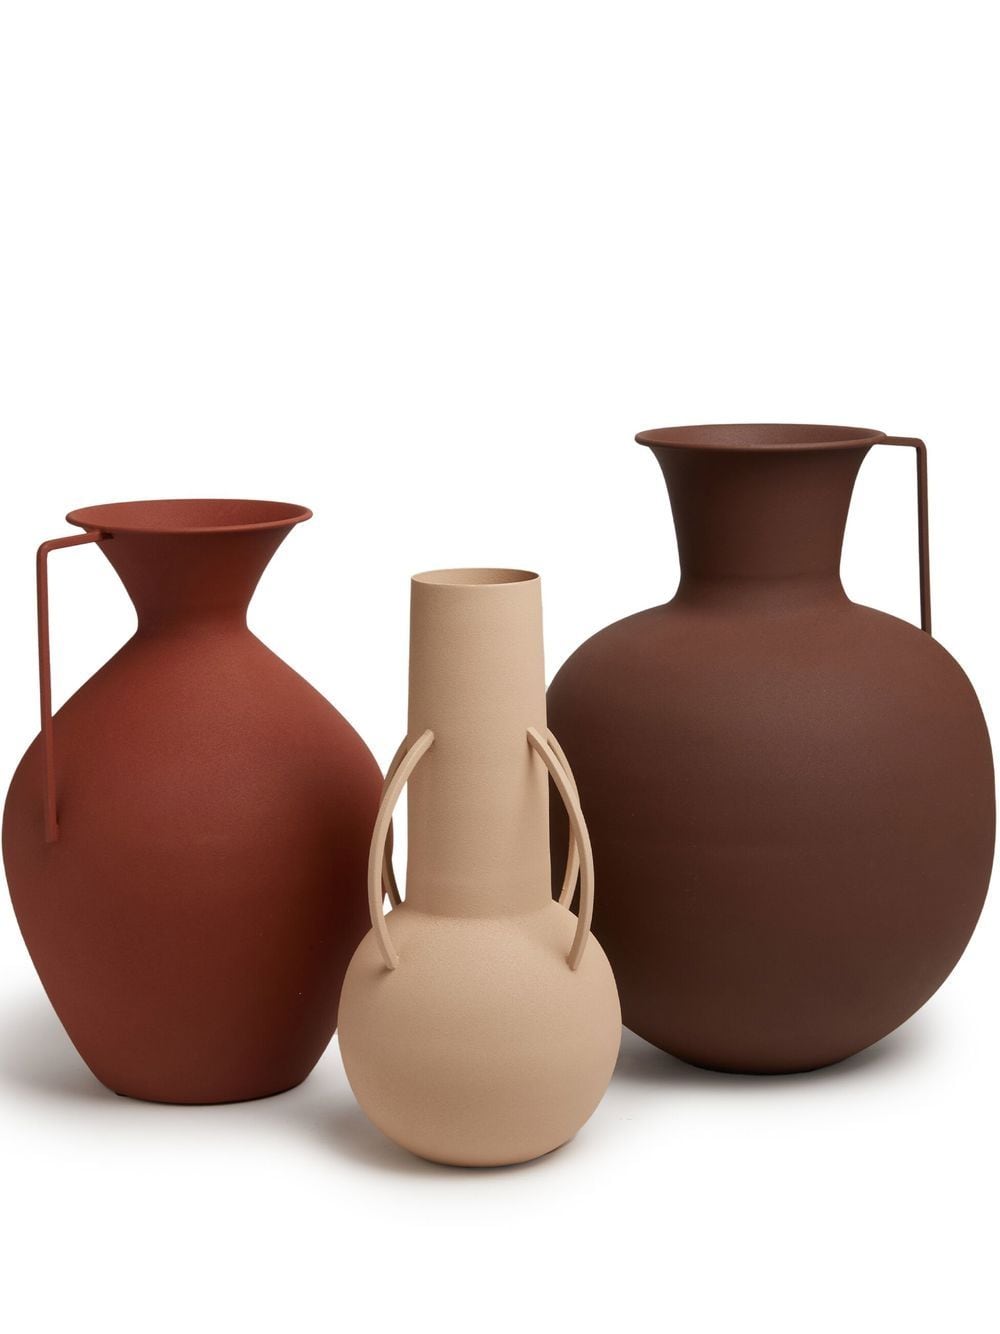 POLSPOTTEN set of three Roman vases - Brown von POLSPOTTEN